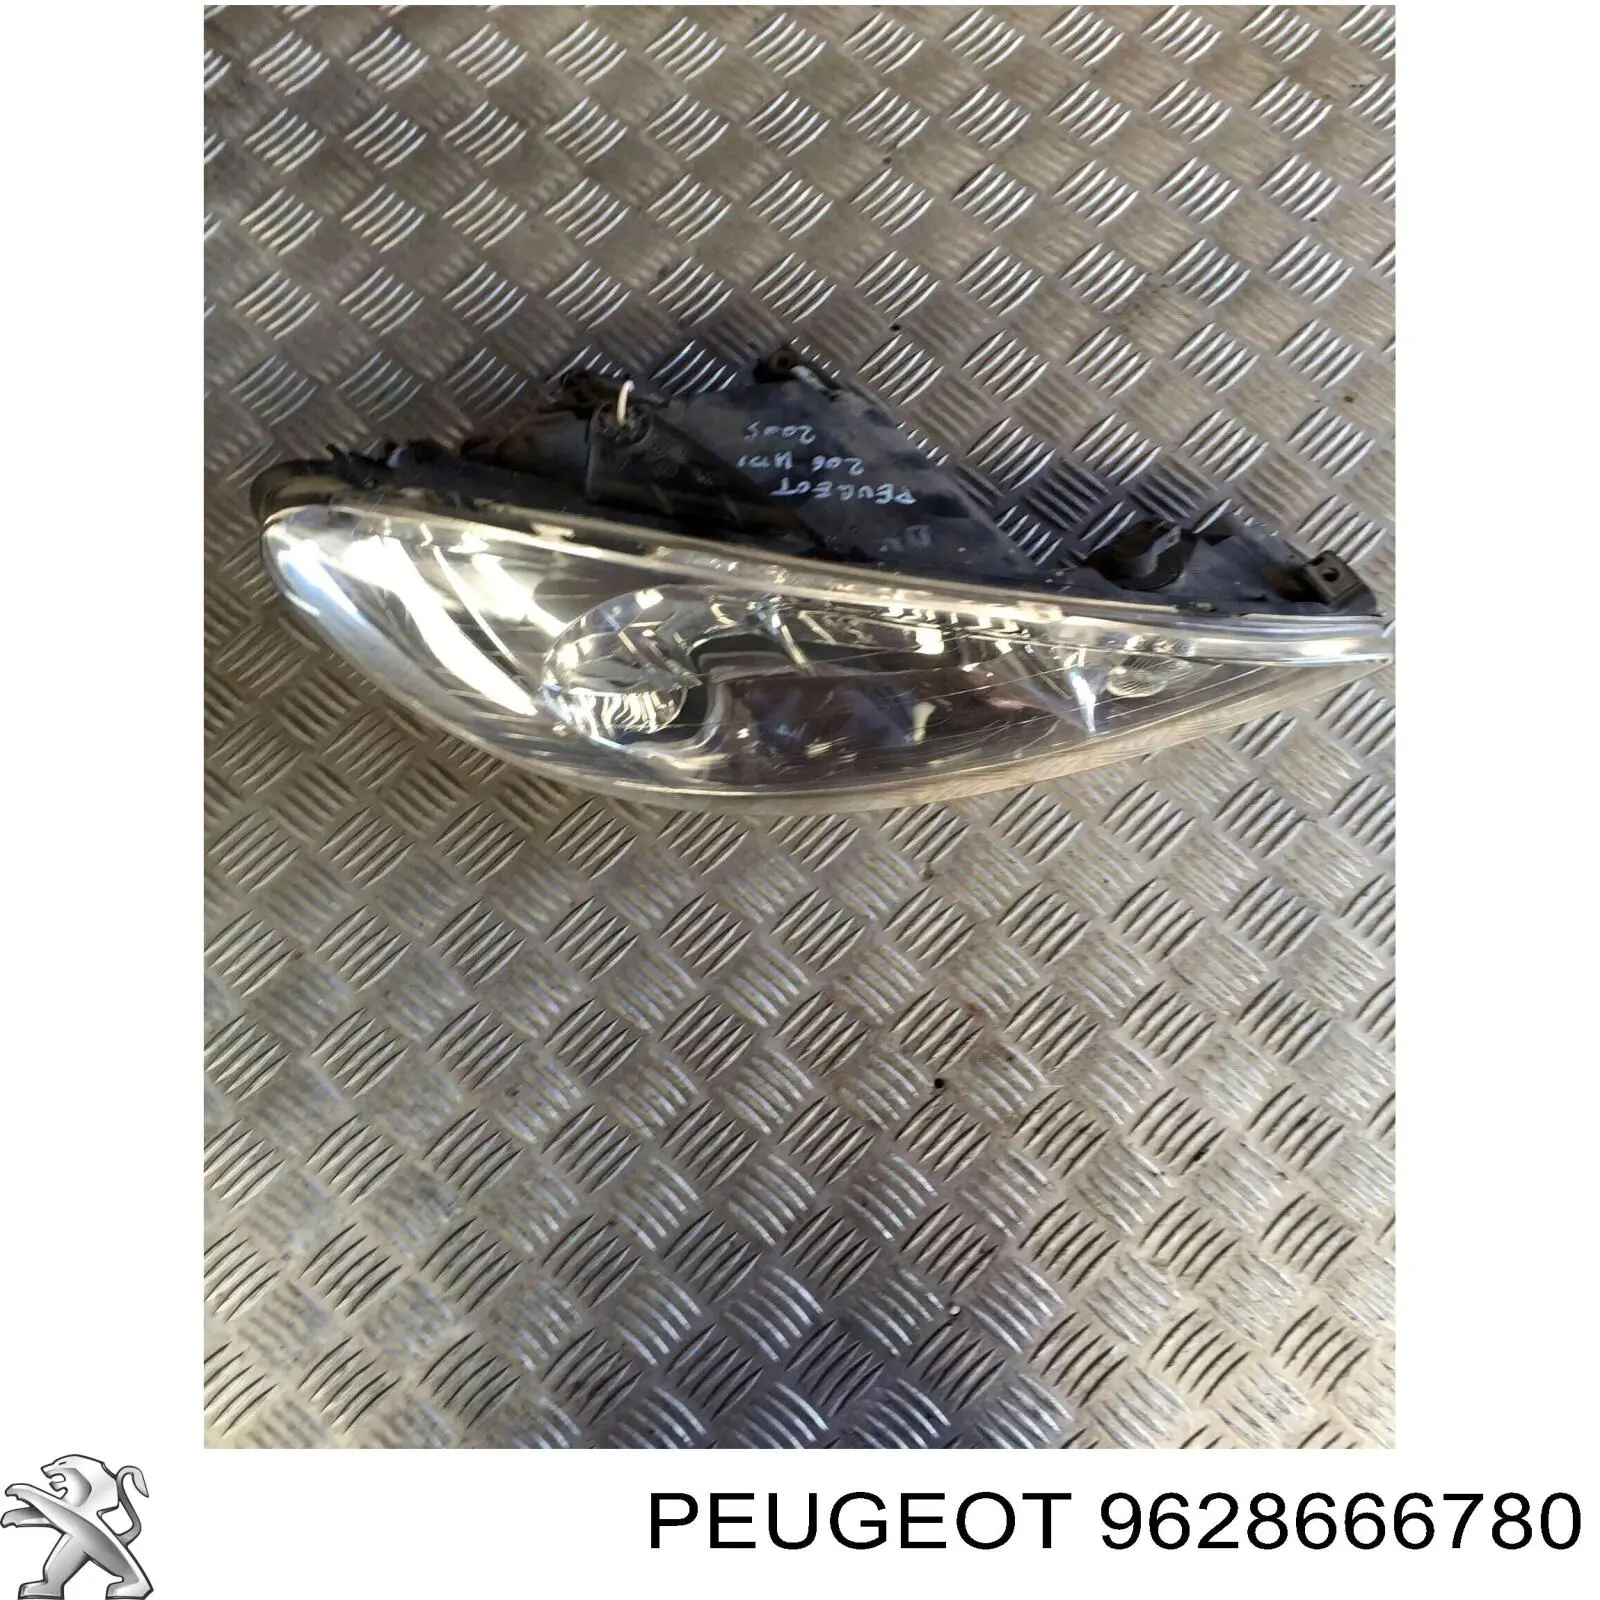 9628666780 Peugeot/Citroen 